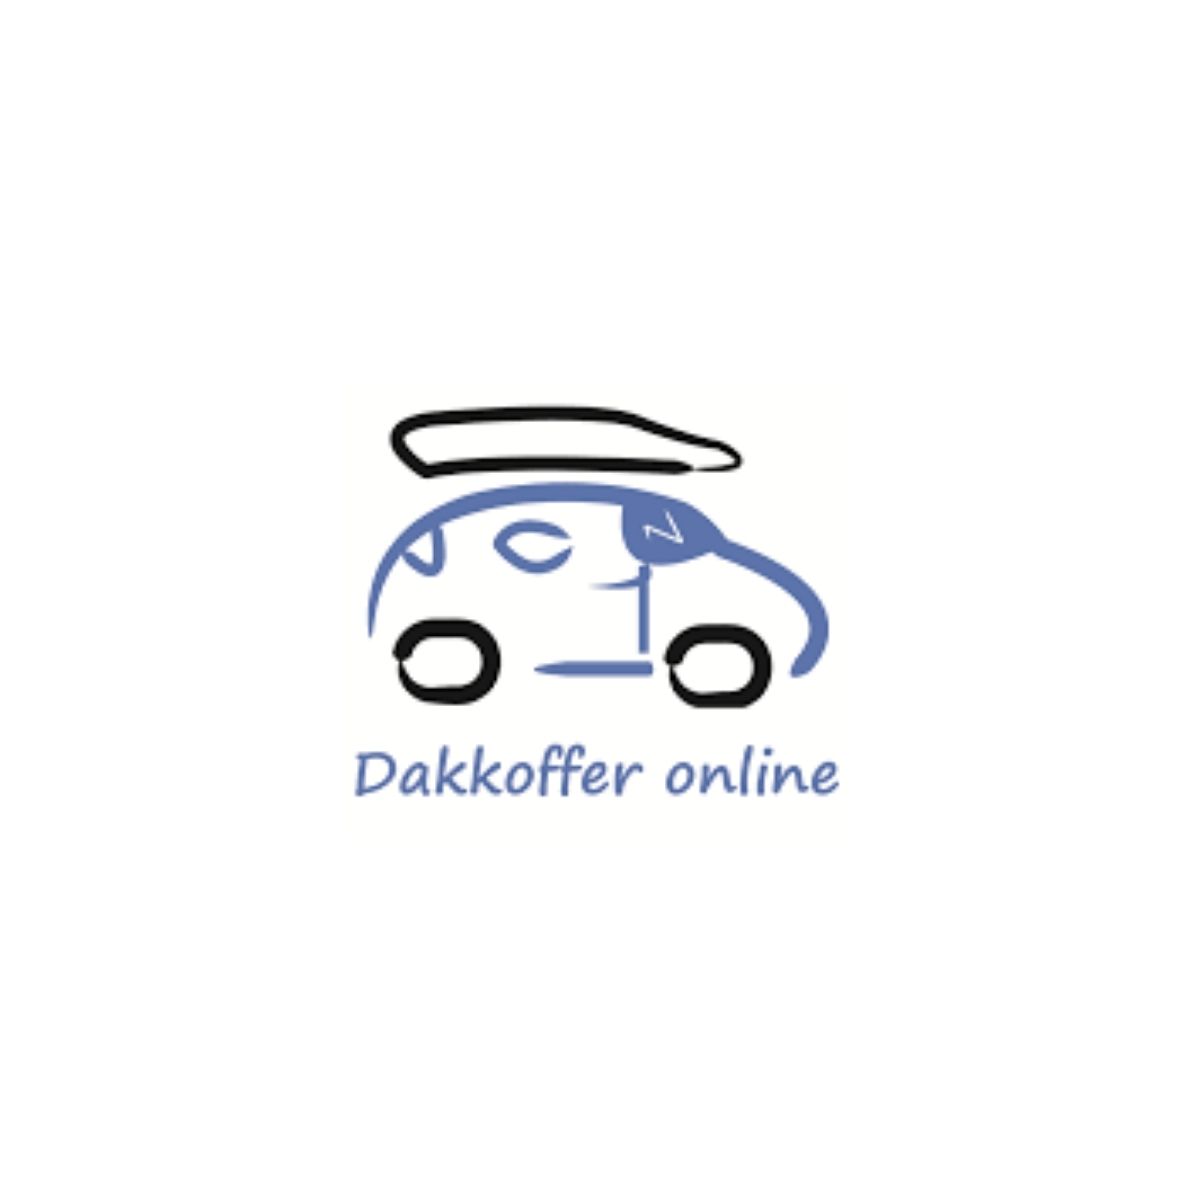 SVR Voordelen donateurs Dakkoffer online